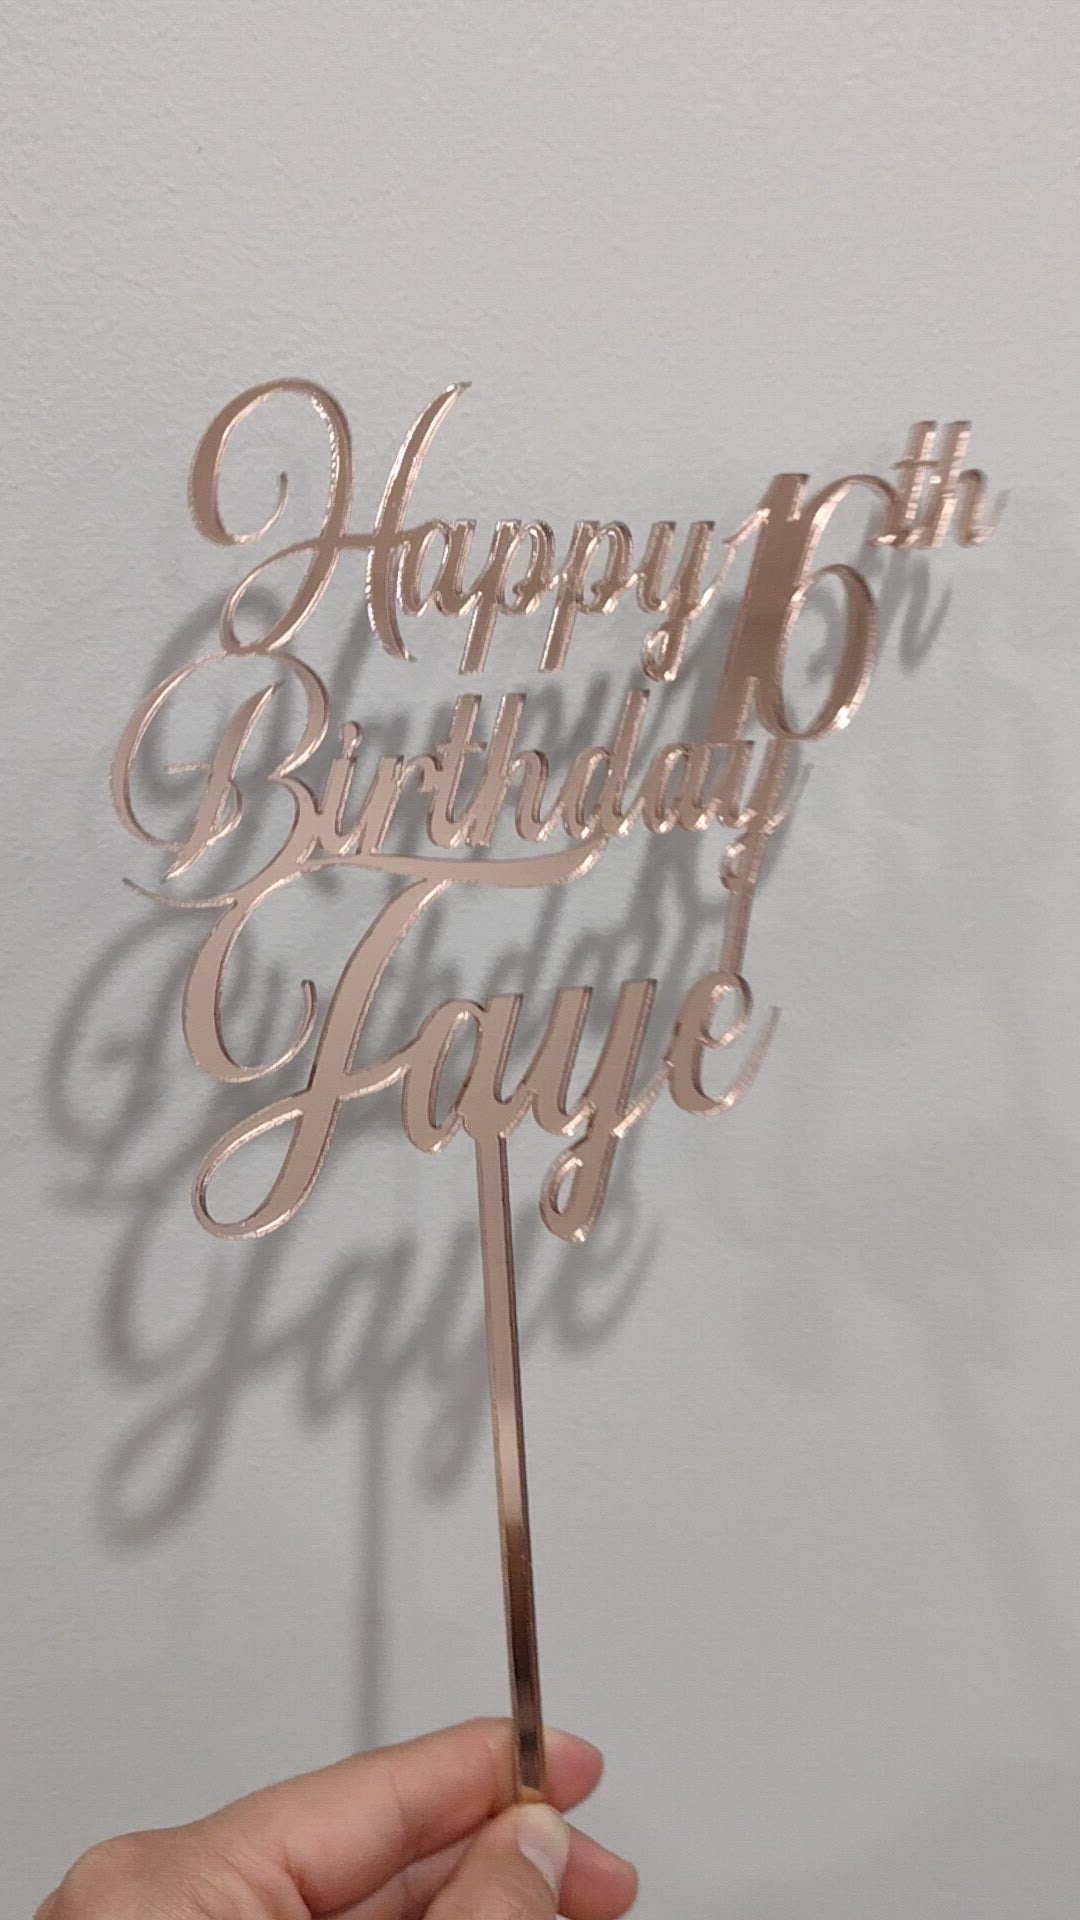 Happy Birthday AGE + NAME Cake Topper